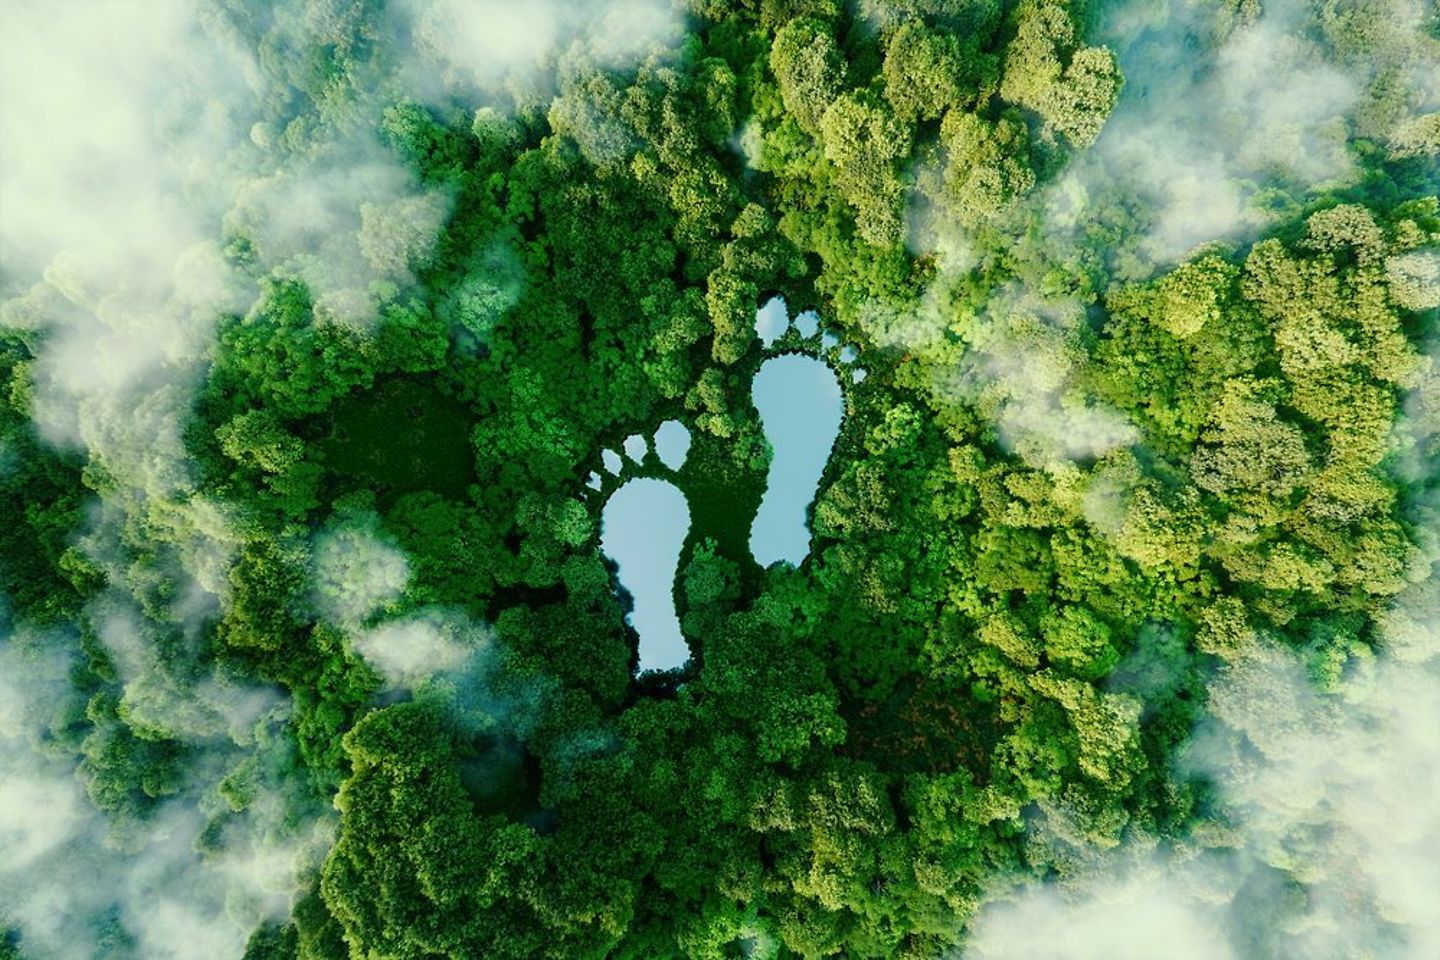 Two lakes shaped like footprints